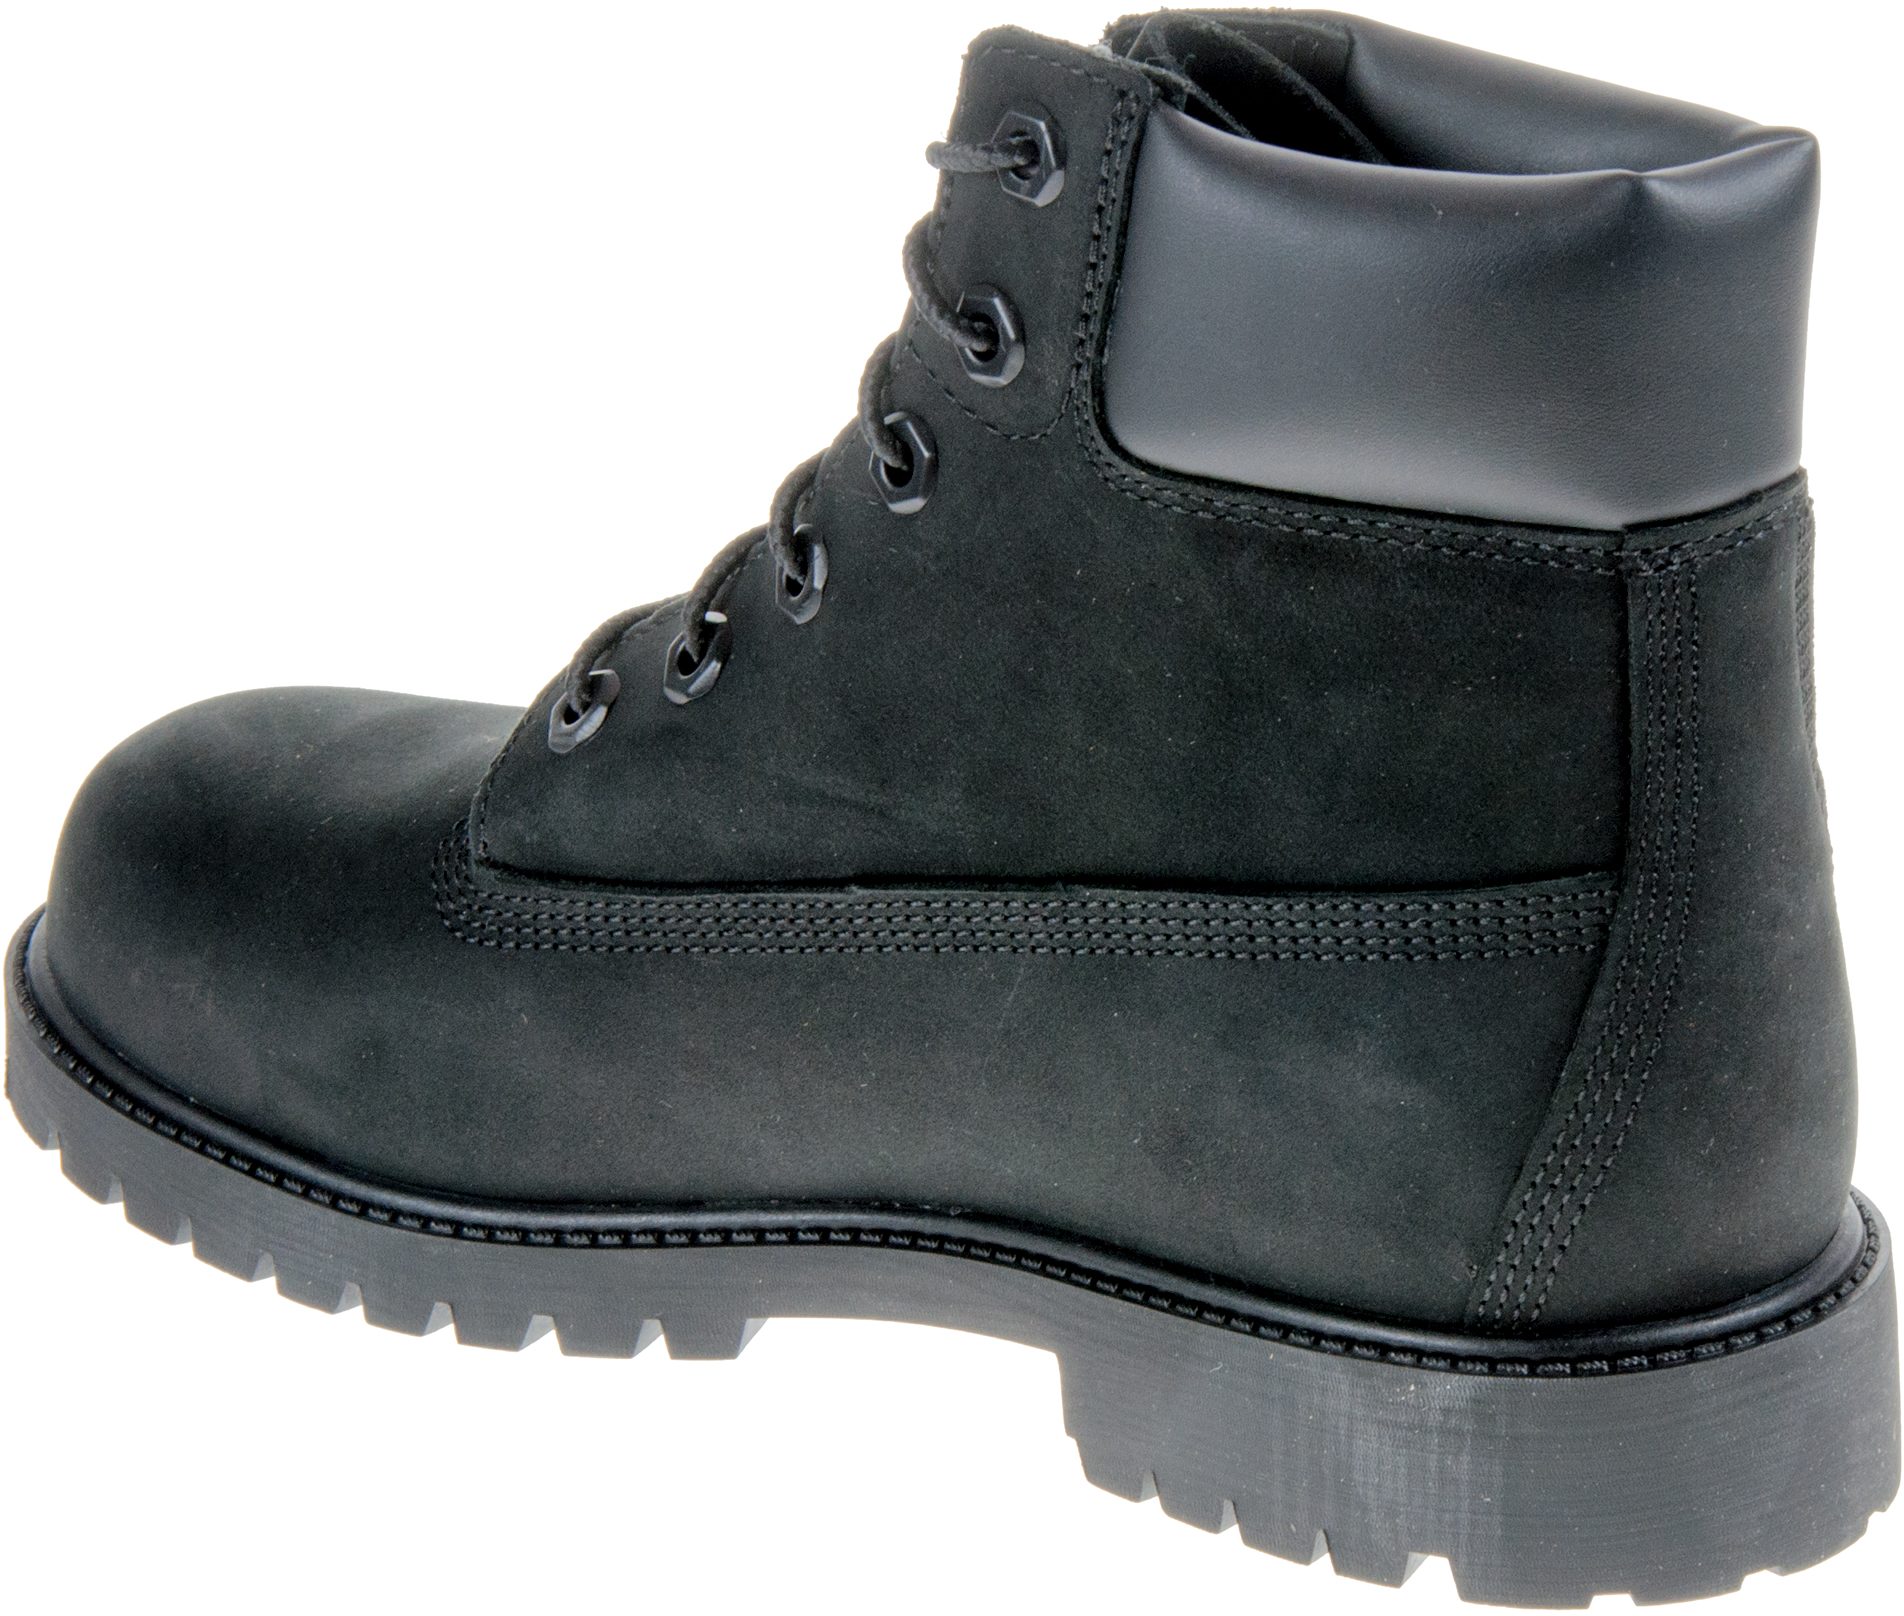 Timberland 6-Inch Premium Boot Waterproof Junior Black 12907 - Boys